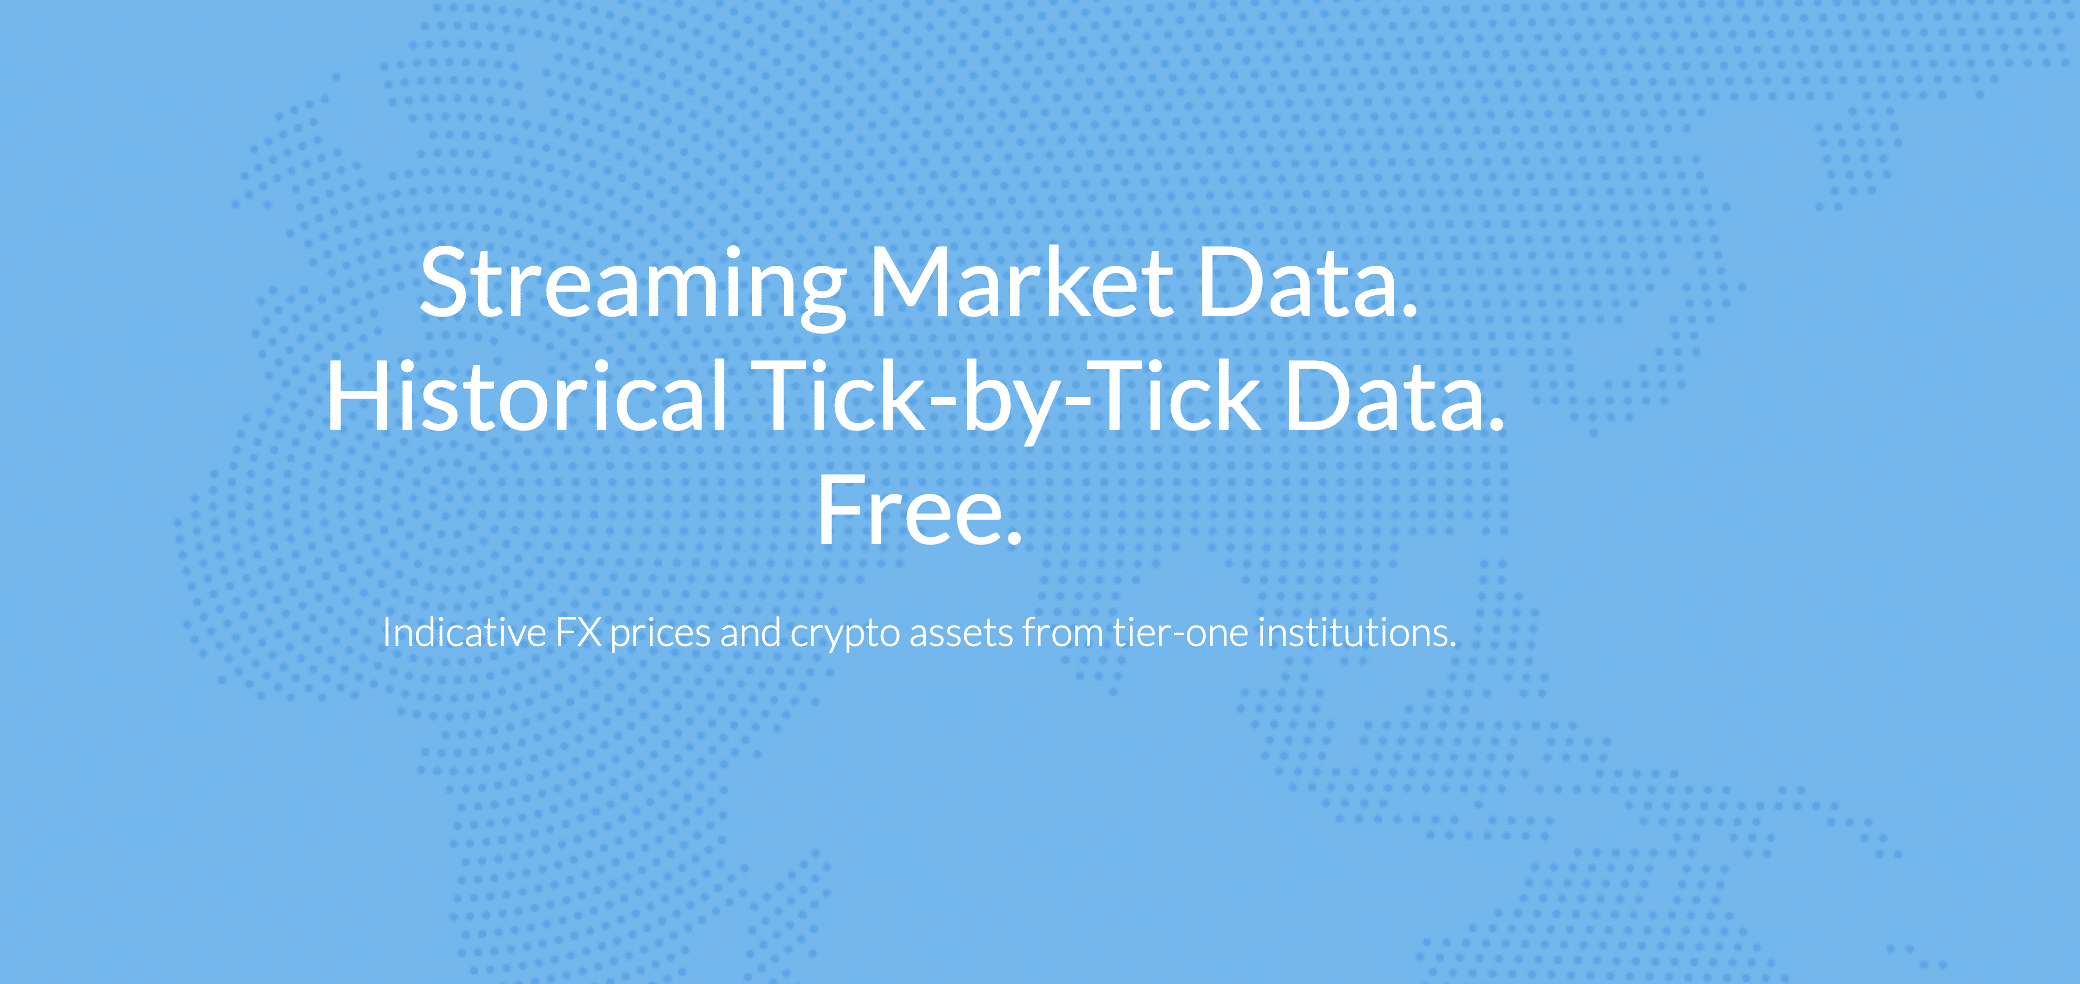 Integral Launches FX Data Streaming Portal TrueFX